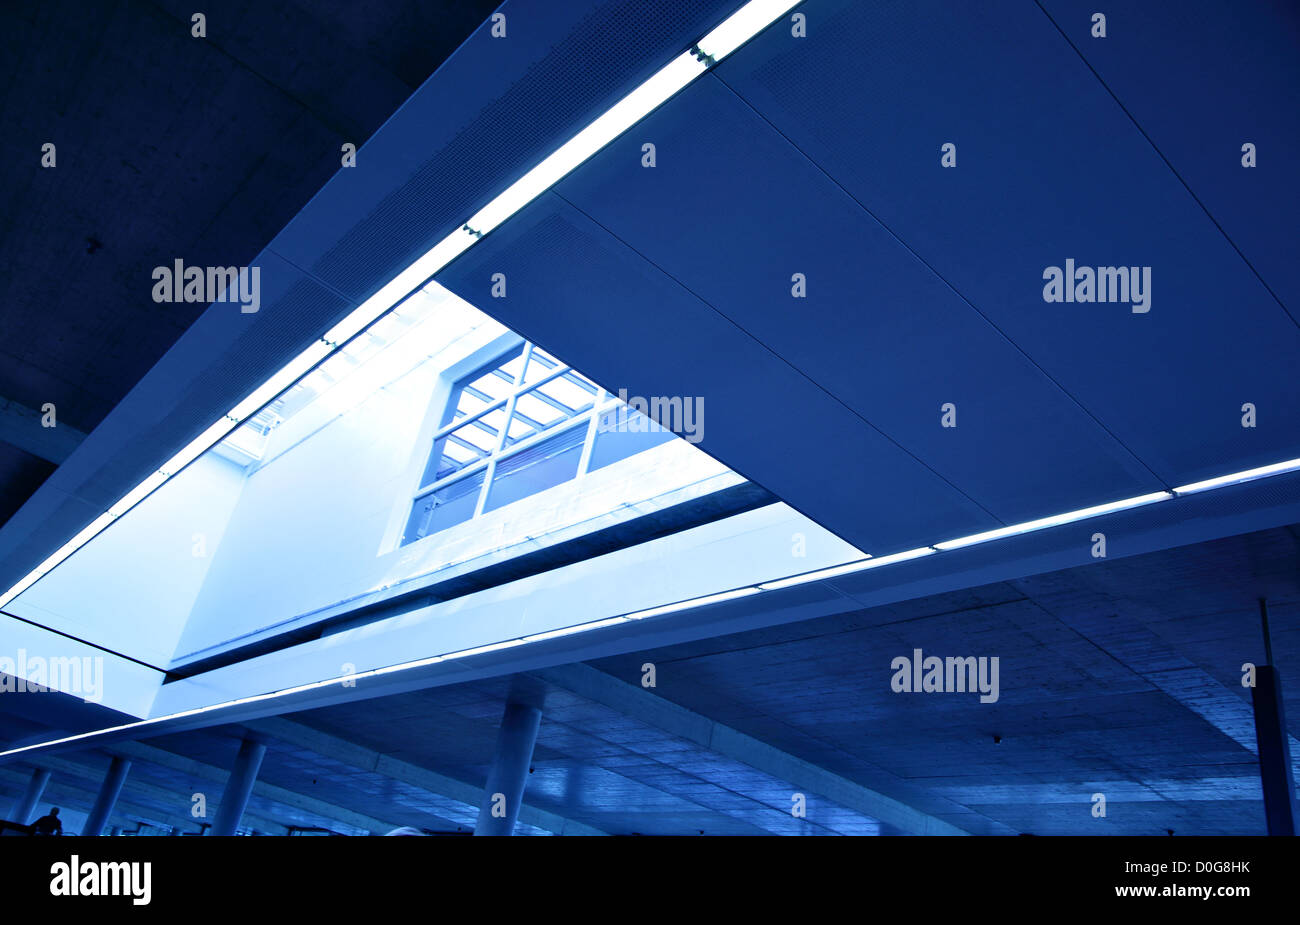 Wide angle shot of modern interior with skylight window  Stock Photo